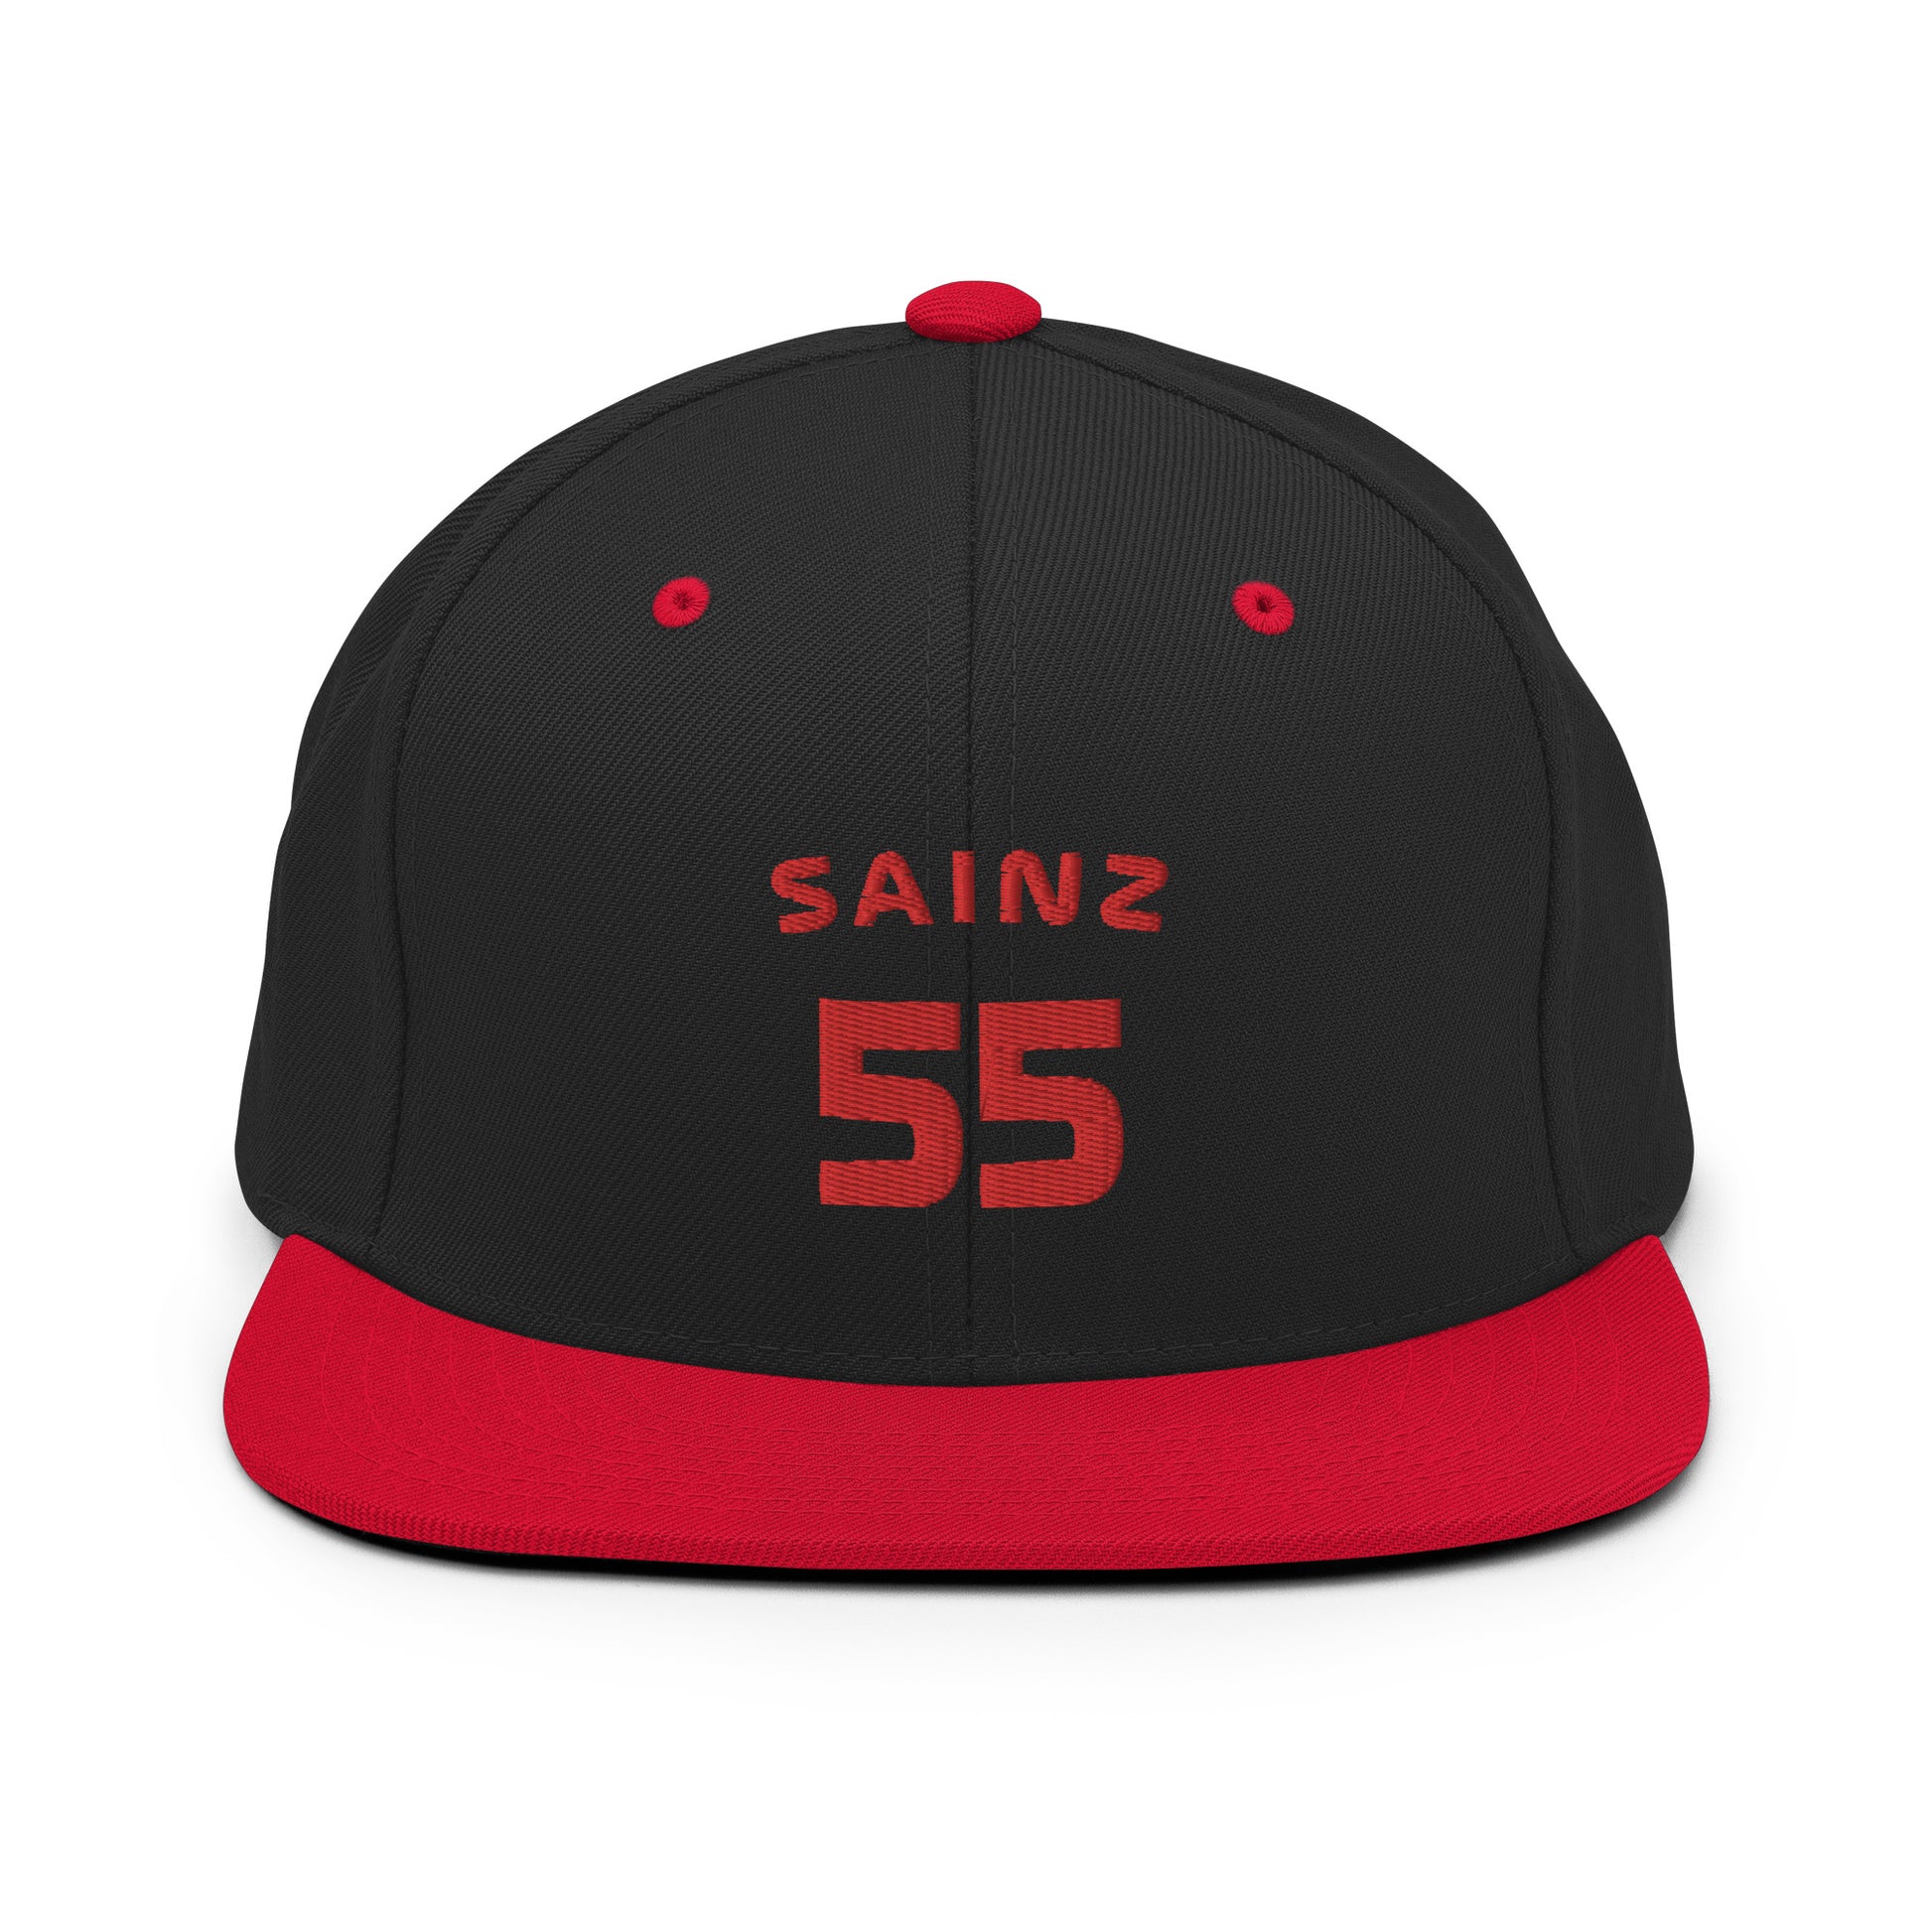 carlos sainz 55 snapback hat red and black